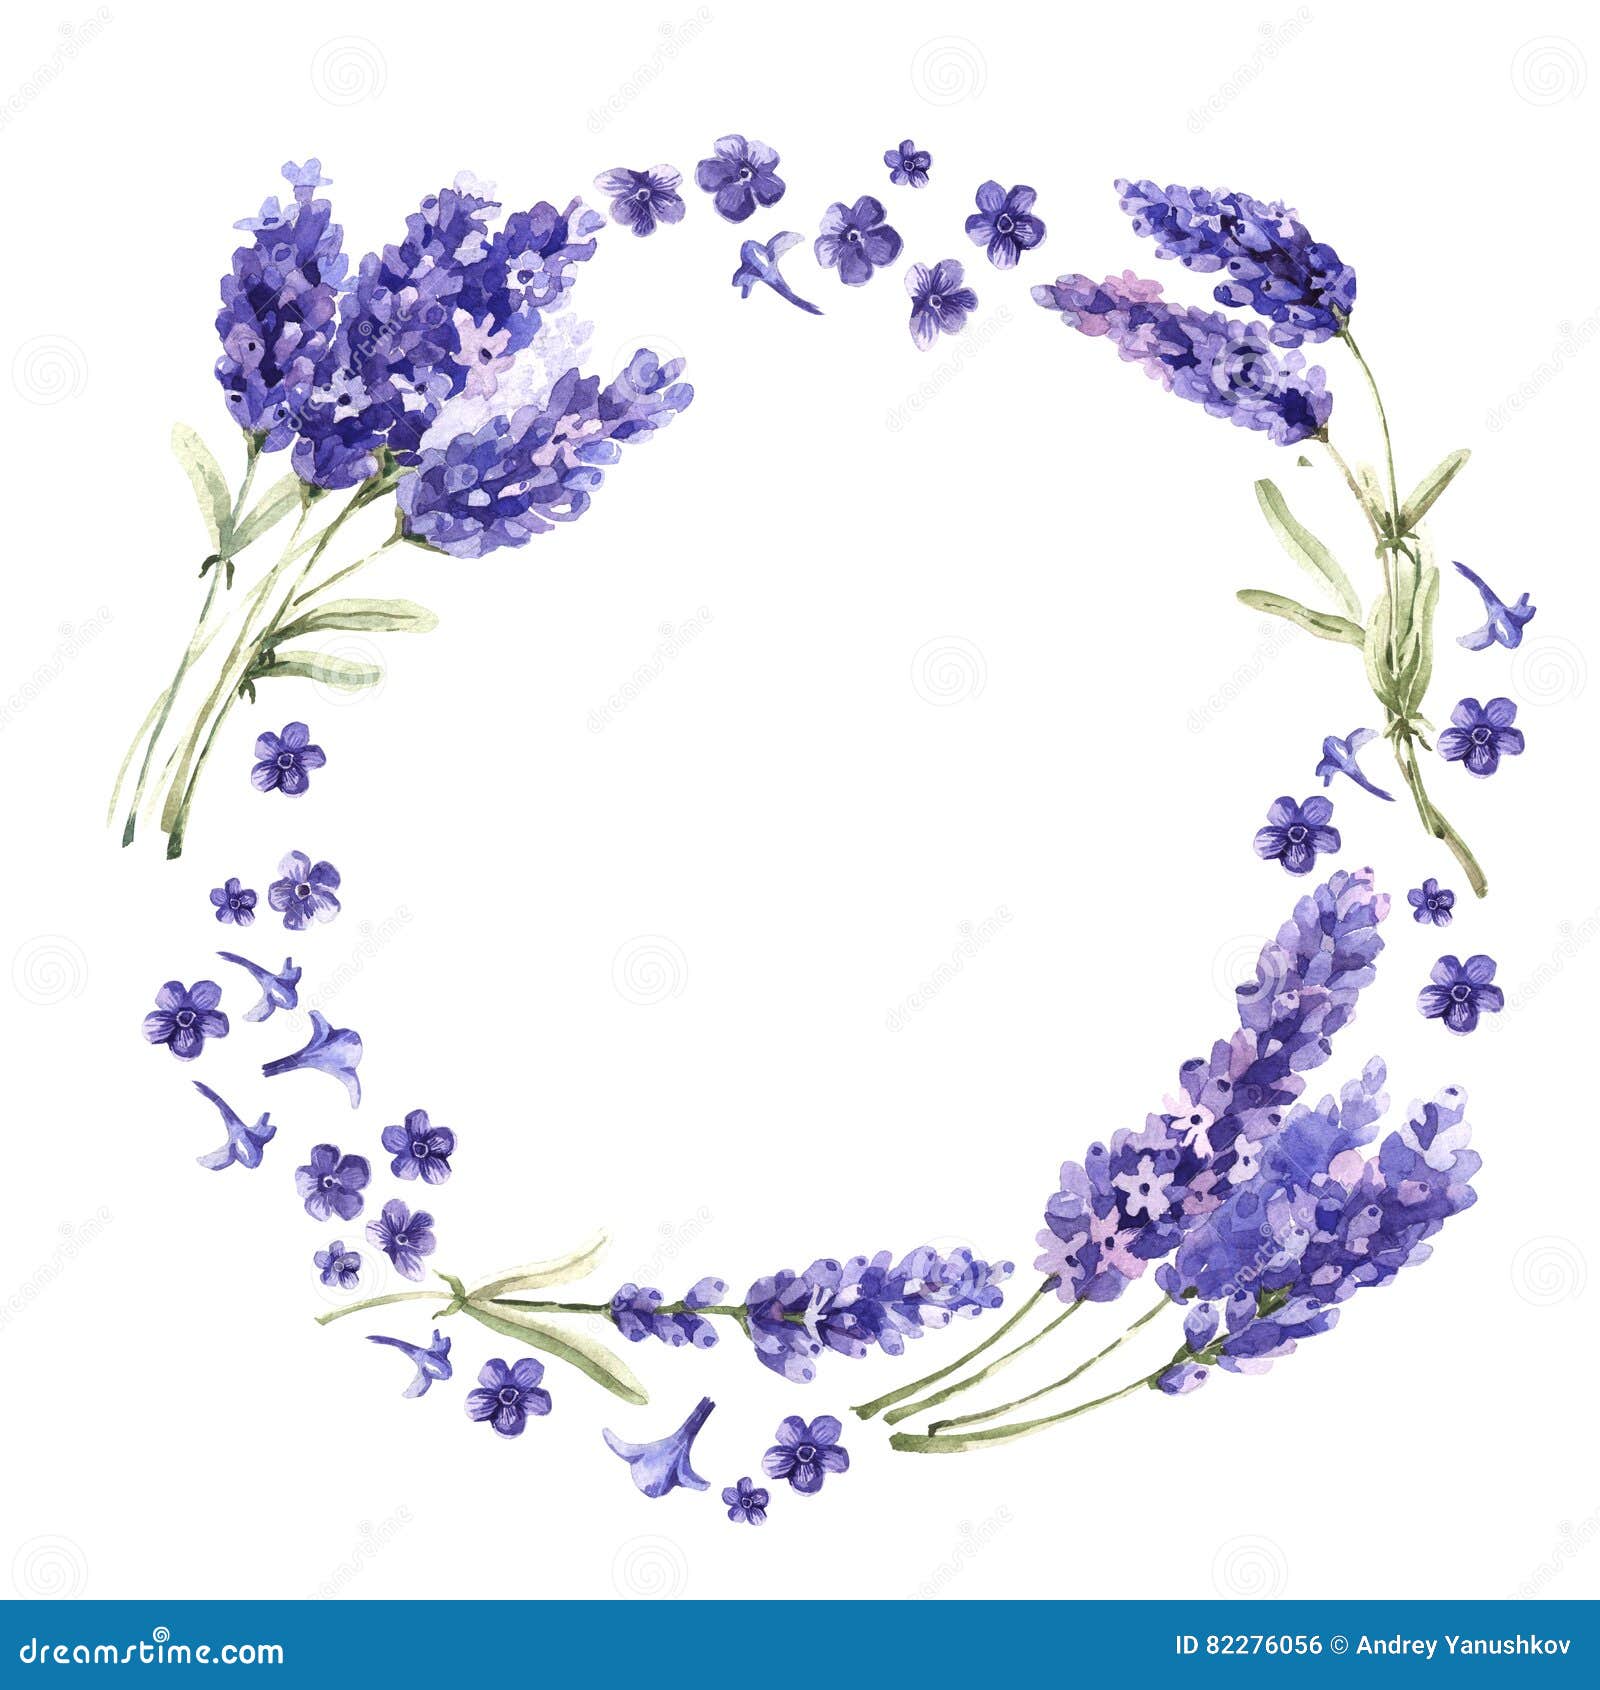 wildflower lavender flower wreath in a watercolor style .